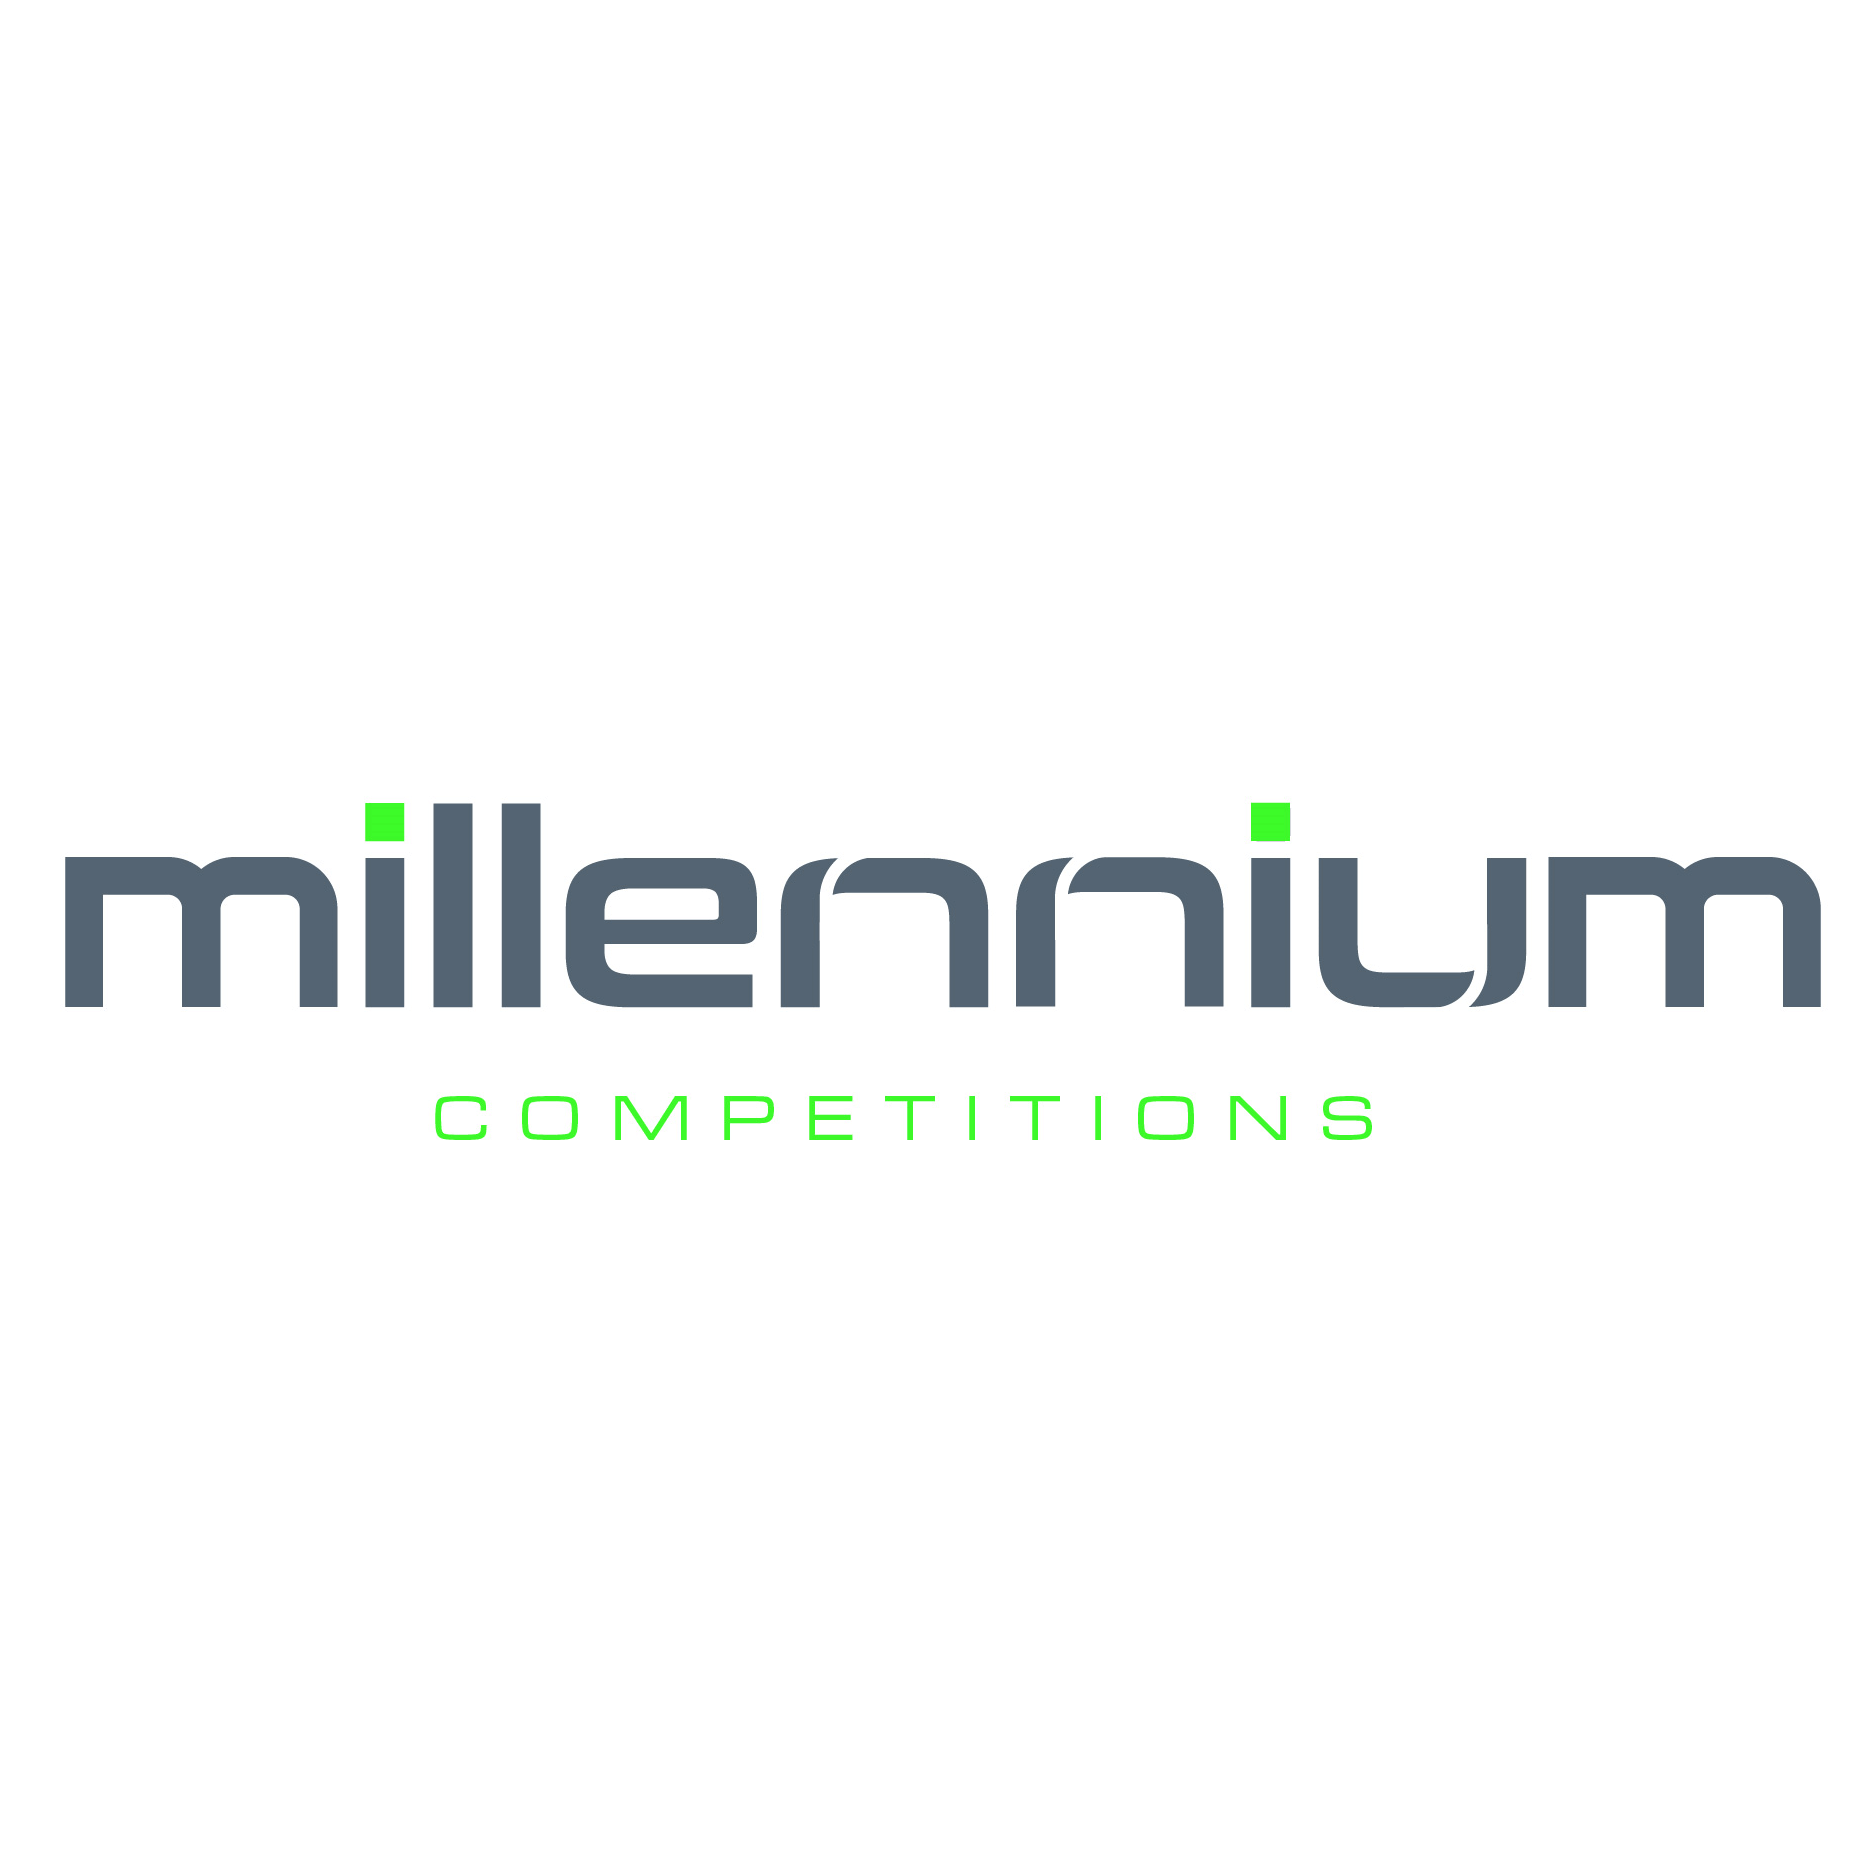 Millennium Competitions